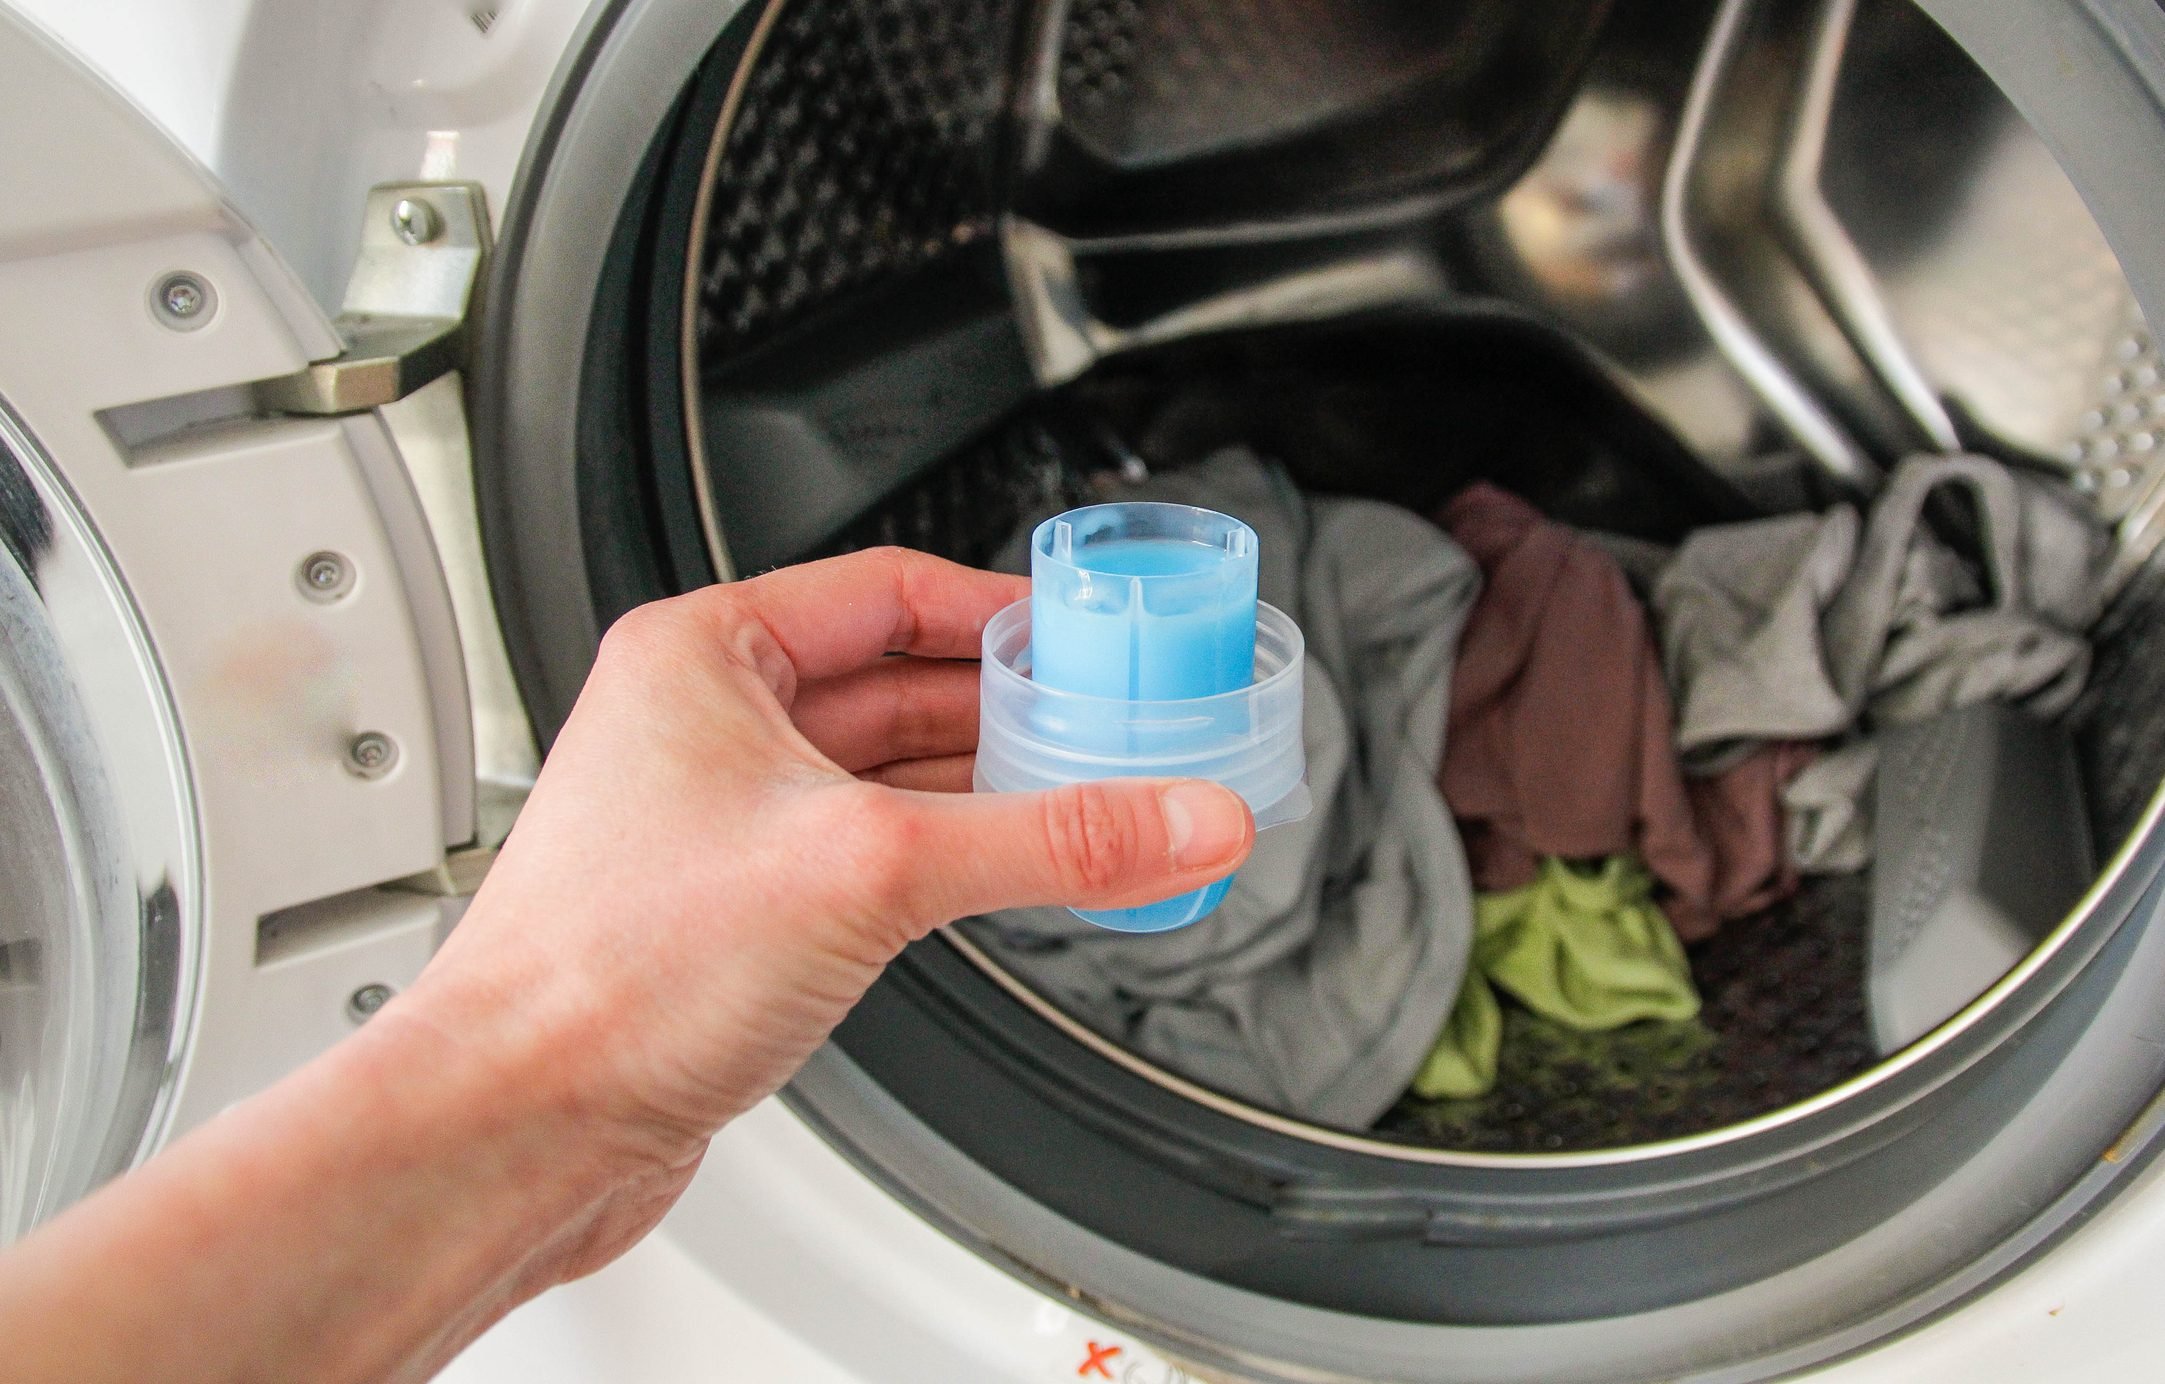 measuring cup of liquid laundry detergent